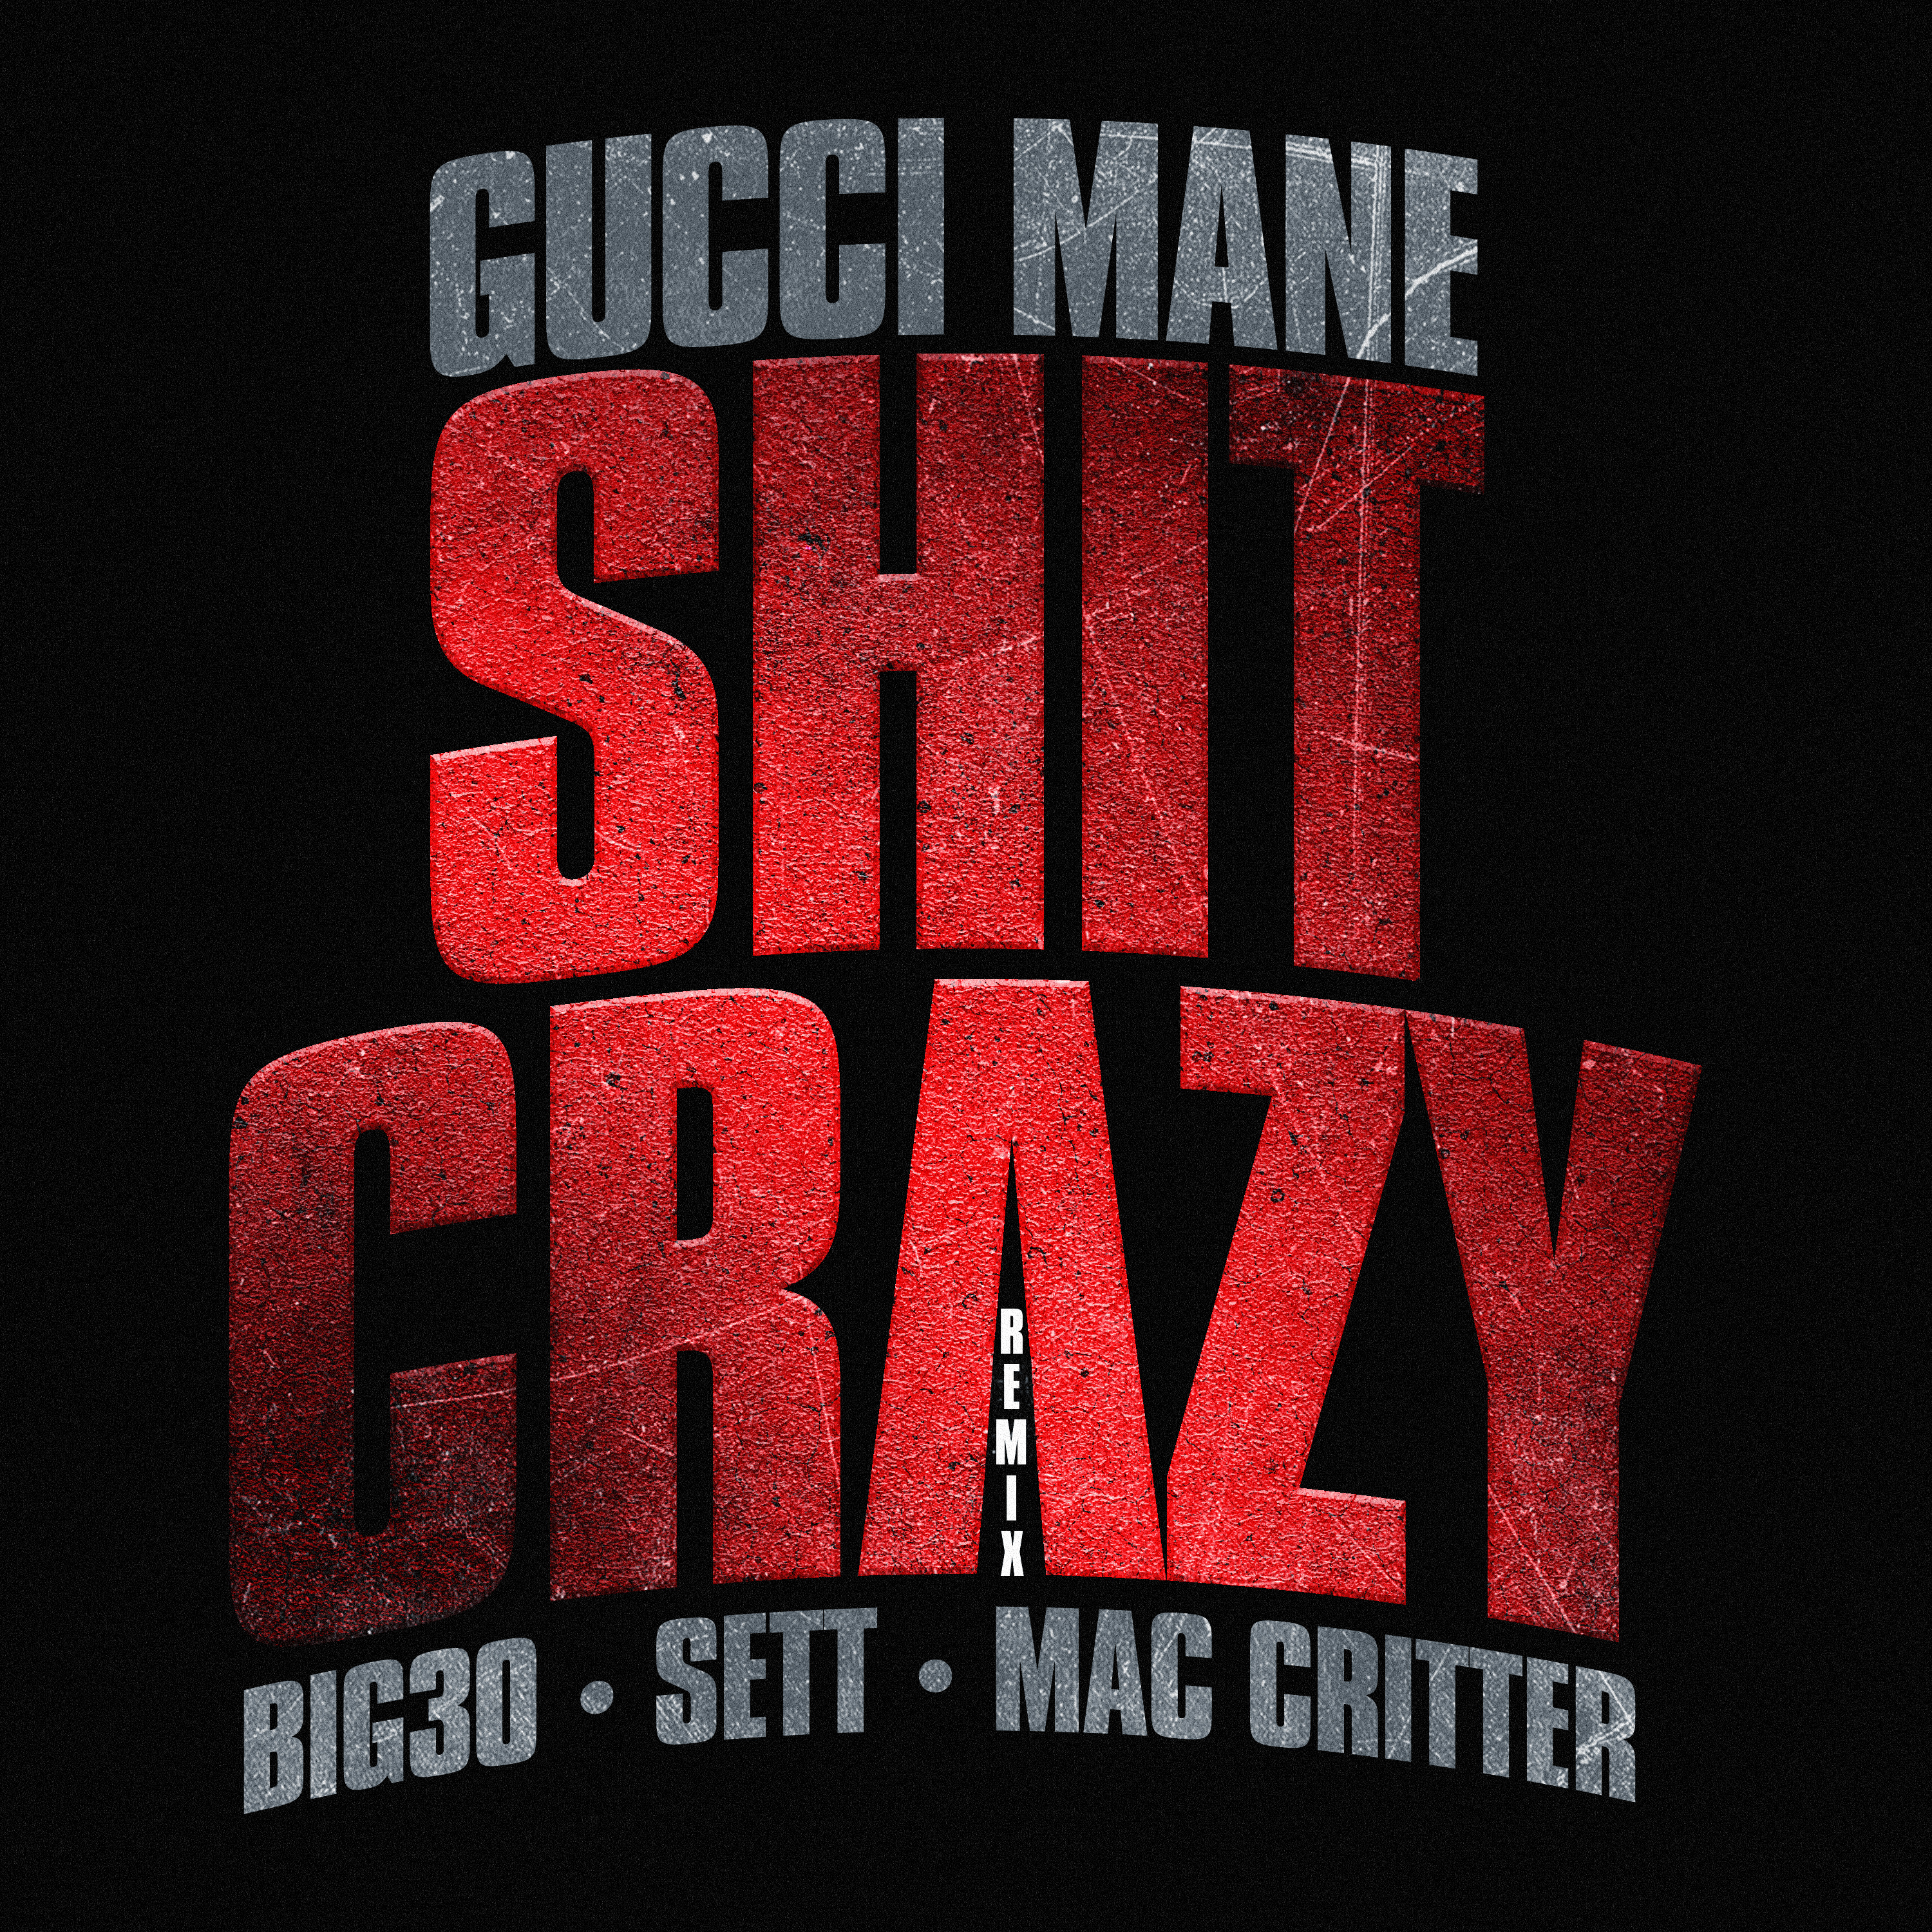 Gucci Mane – Shit Crazy Remix (feat. BIG30, Sett, Mac Critter)